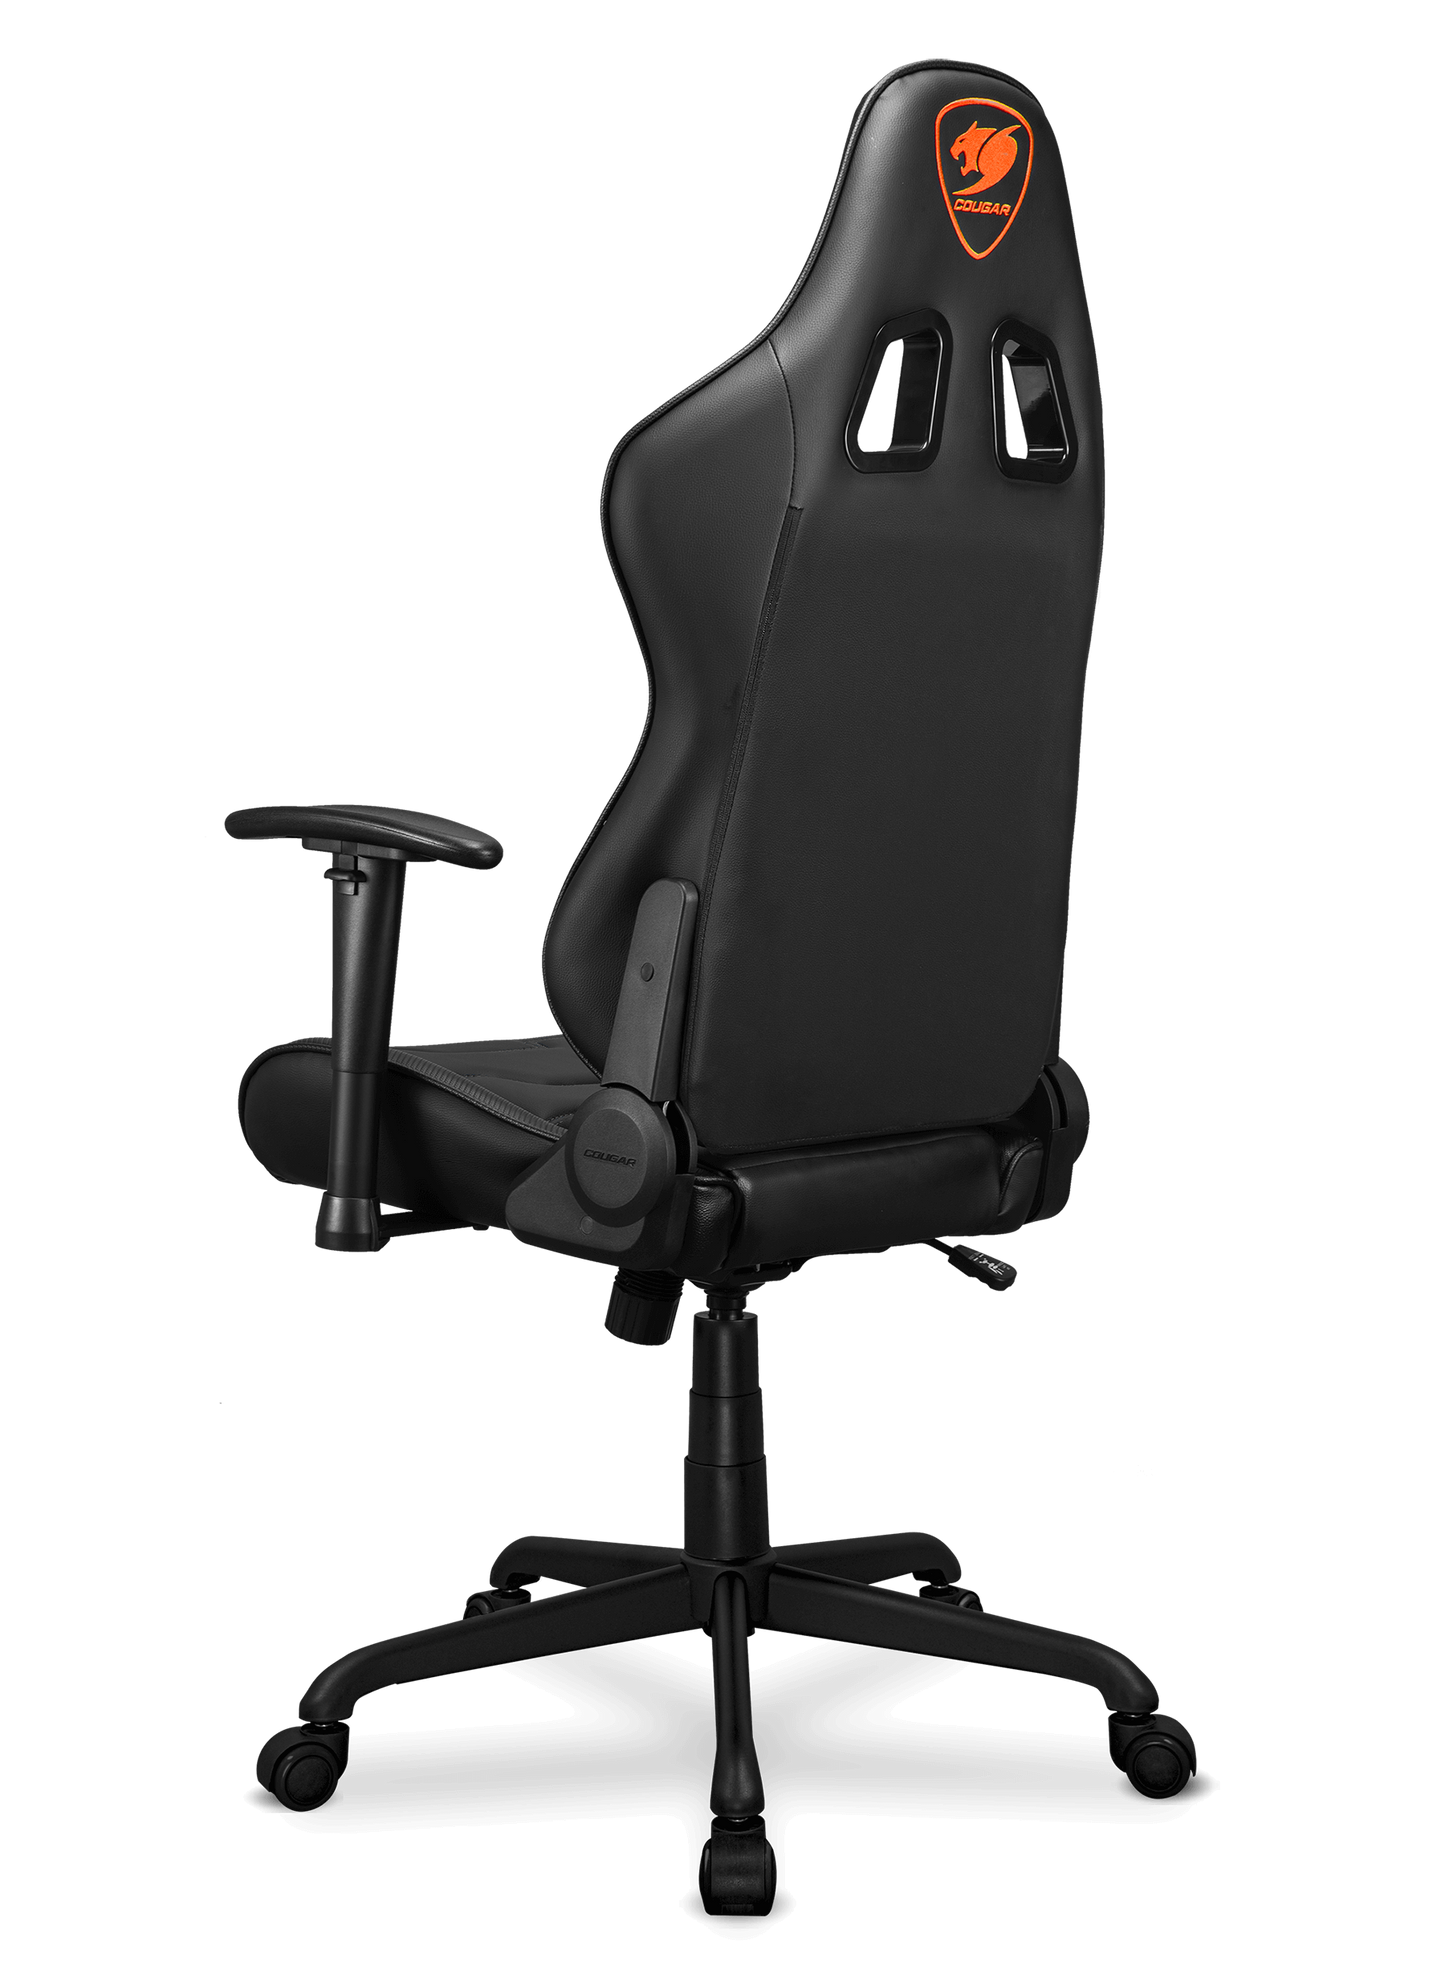 COUGAR Armor Elite Gaming Chair - Black